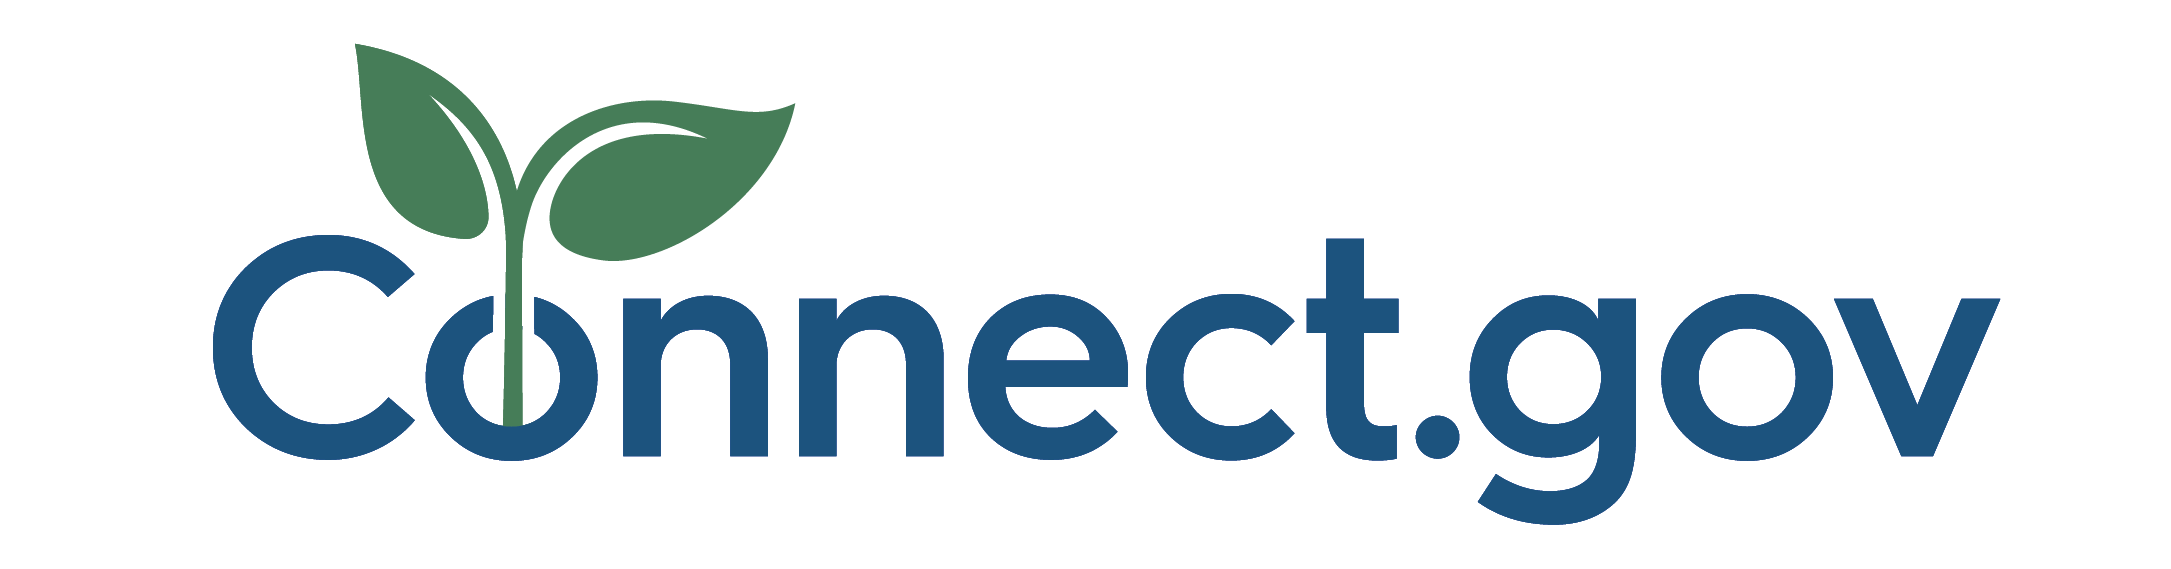 Connect.gov logo